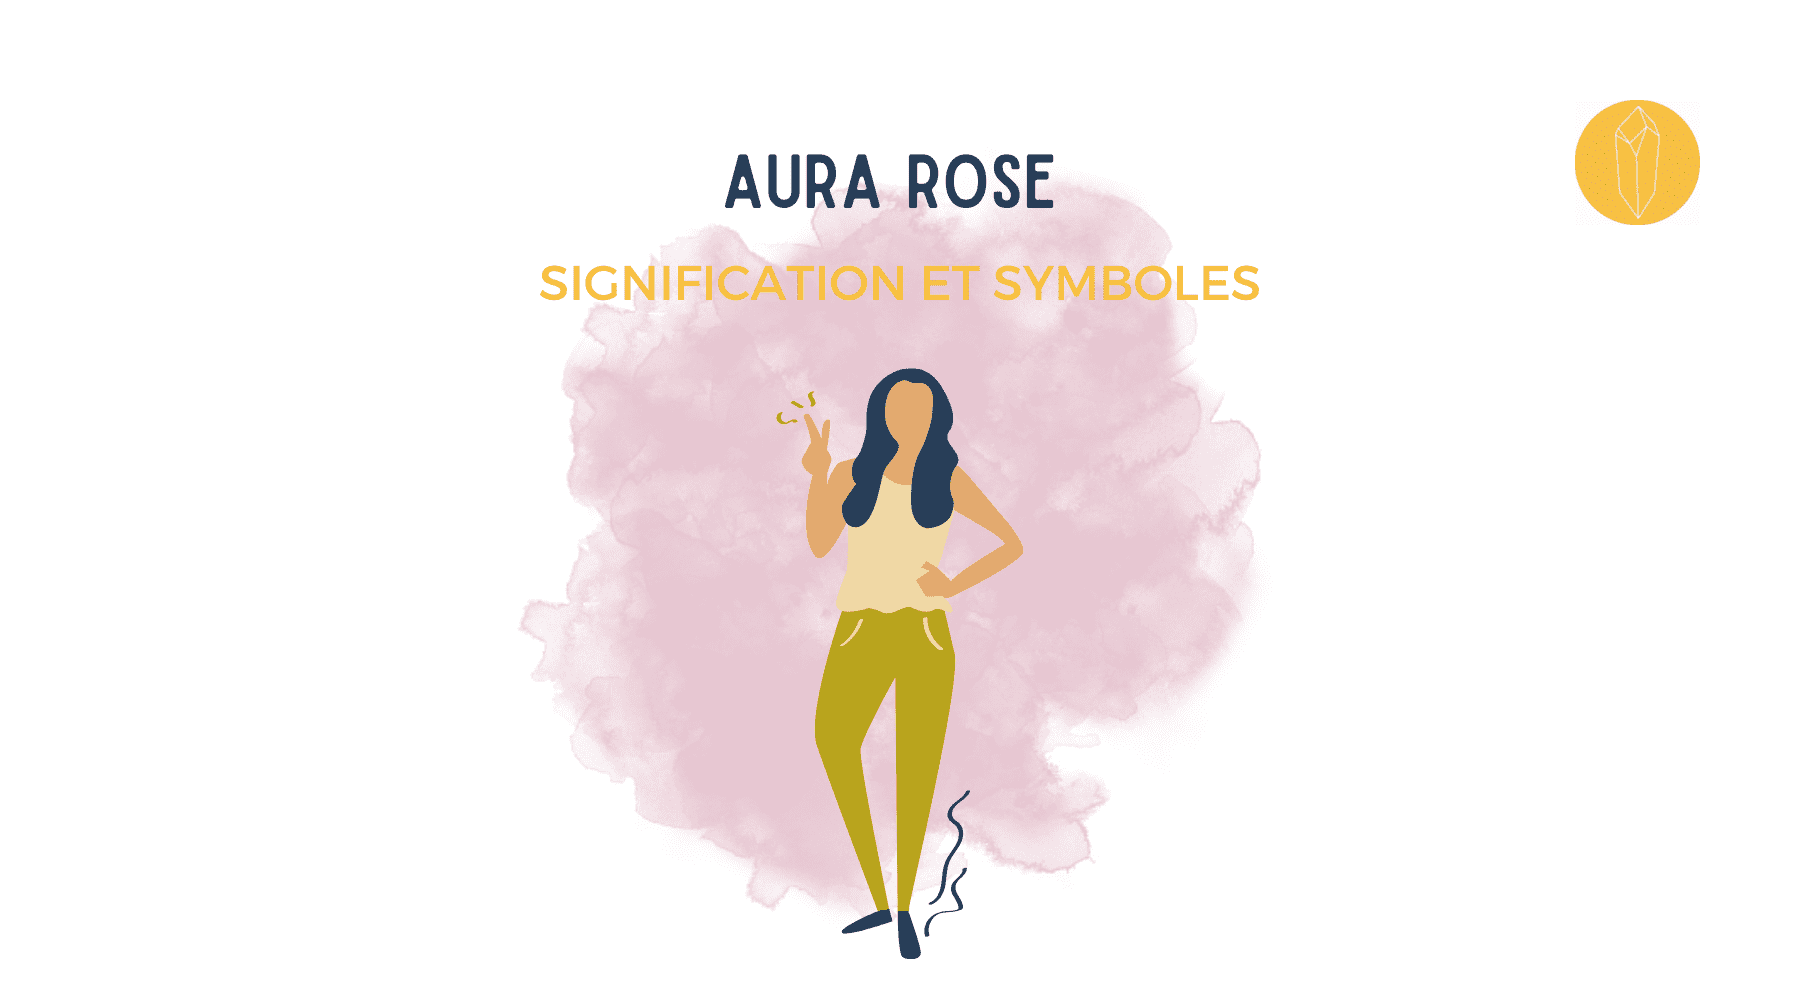 Aura rose signification